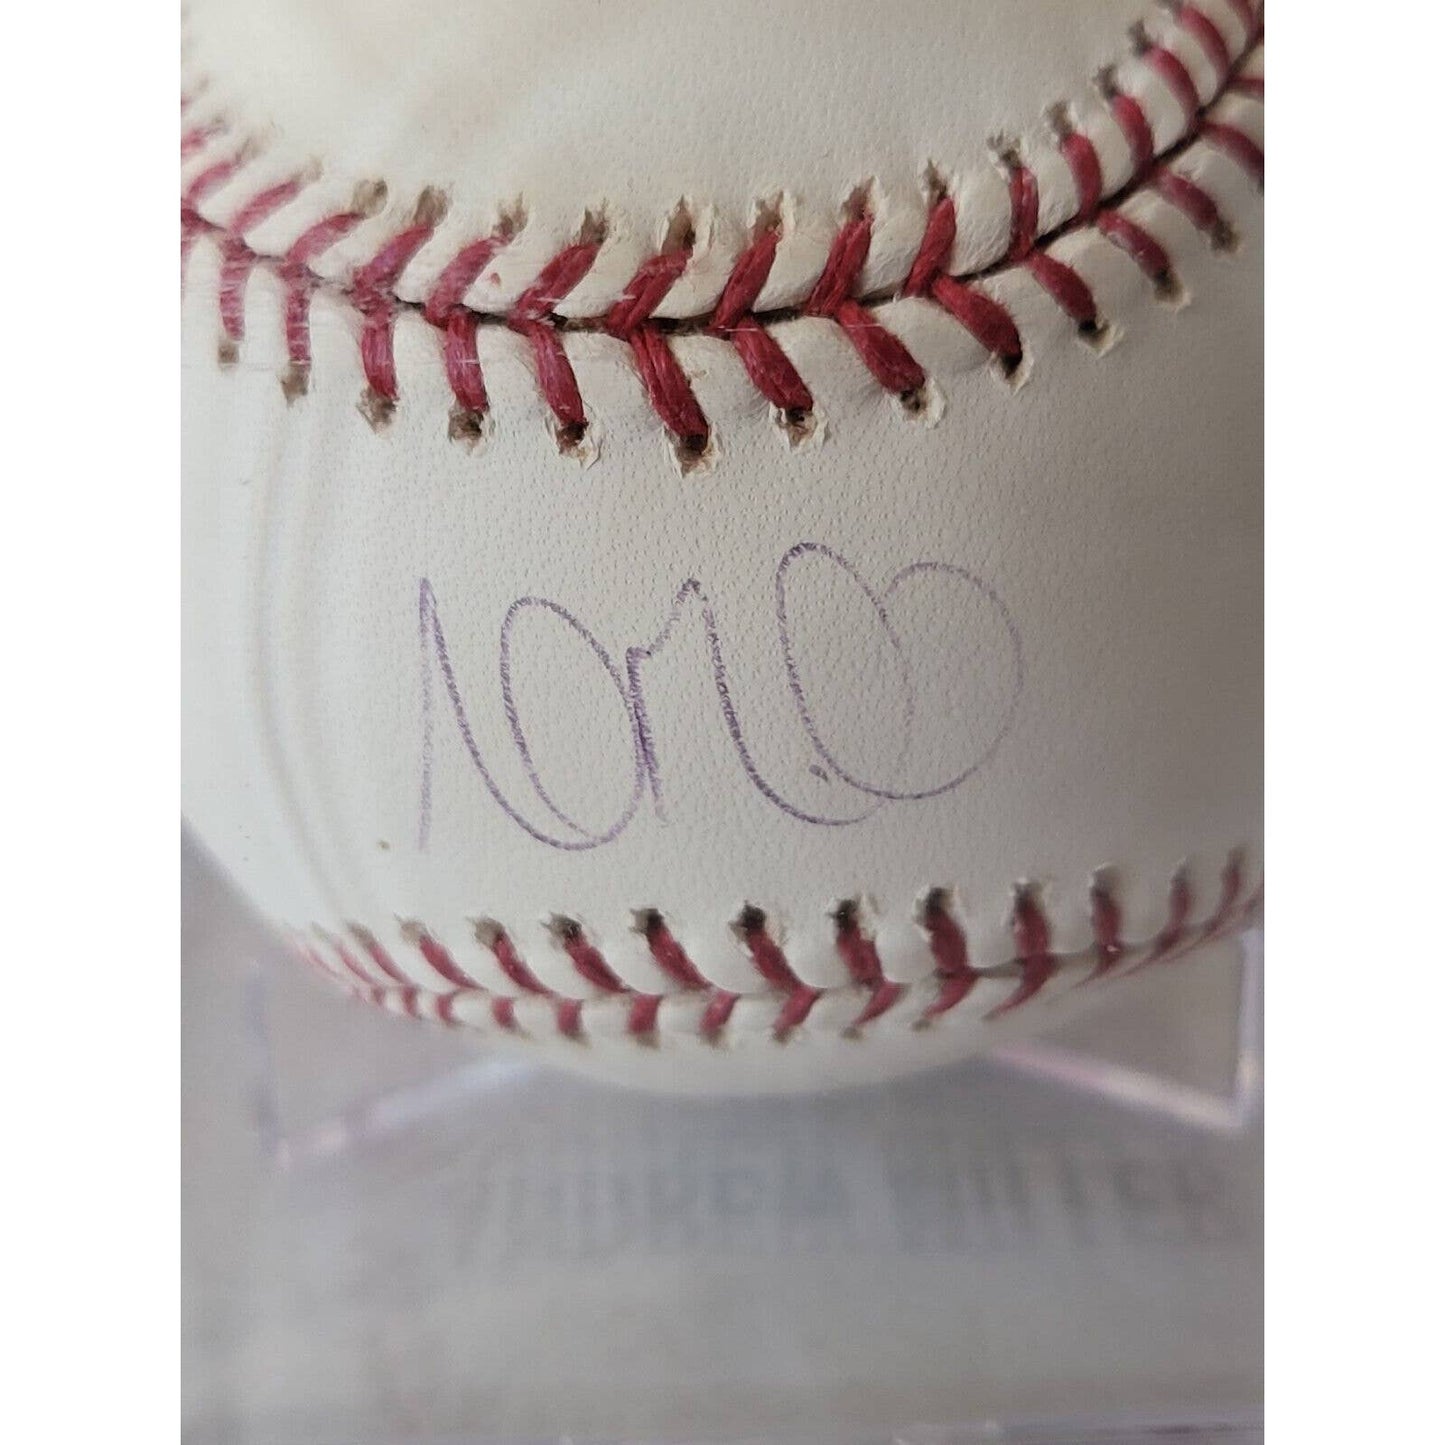 Andrew Miller Autographed/Signed Baseball TRISTAR - TreasuresEvolved